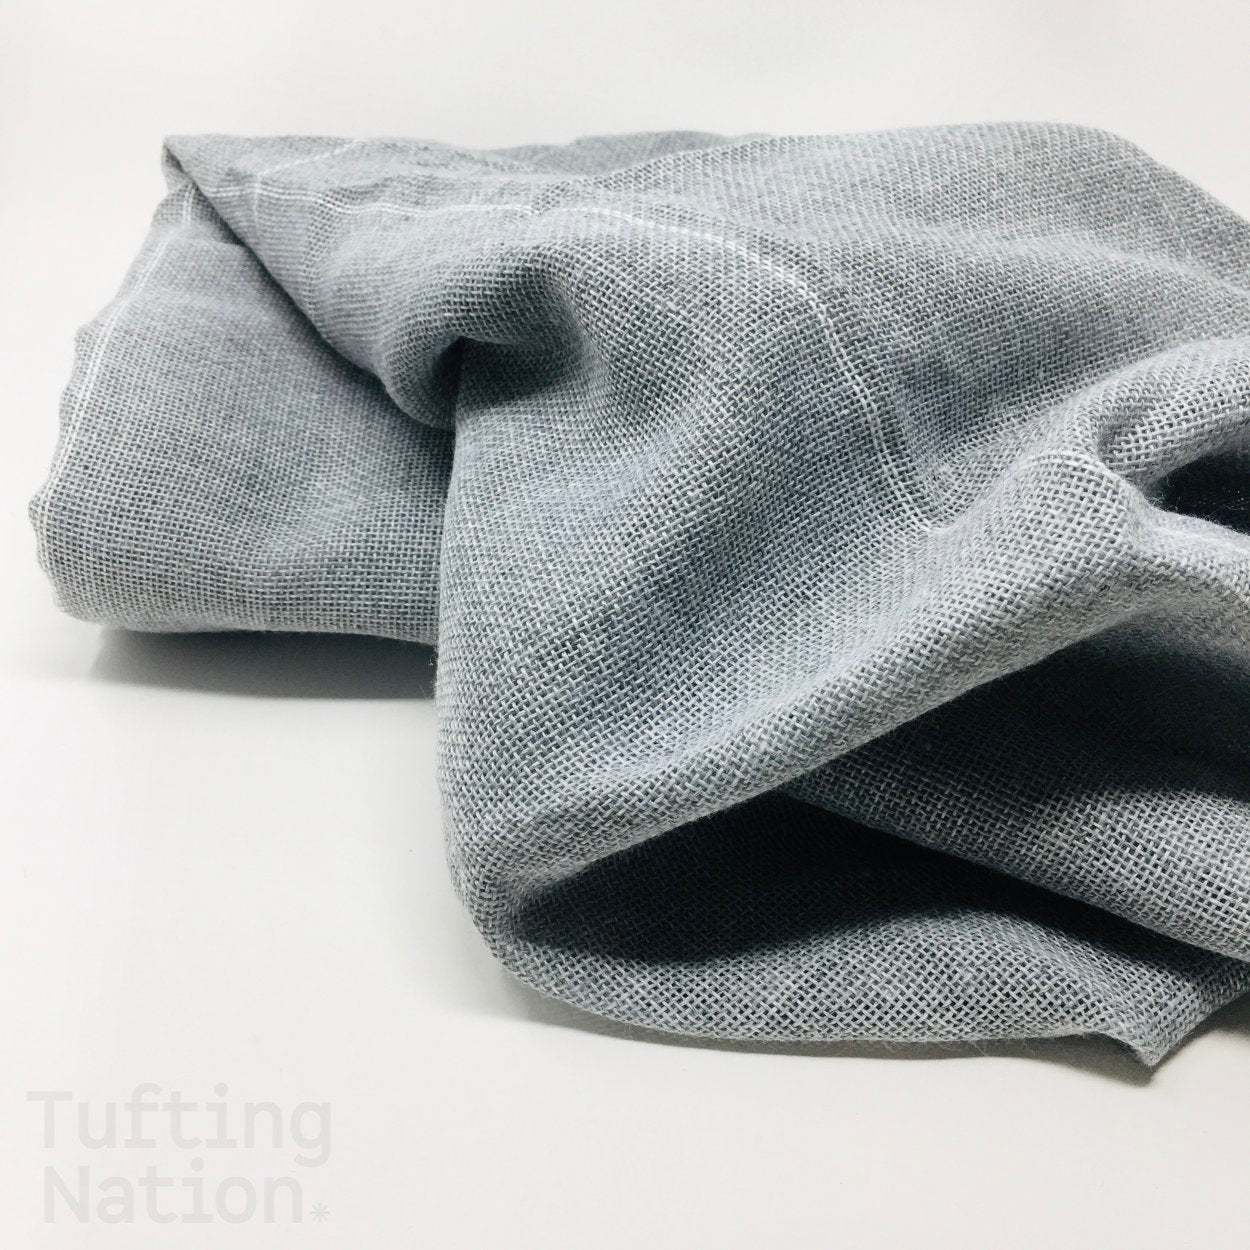 STANDARD Tufting Cloth Canada, Primary Rug Tufting Fabric